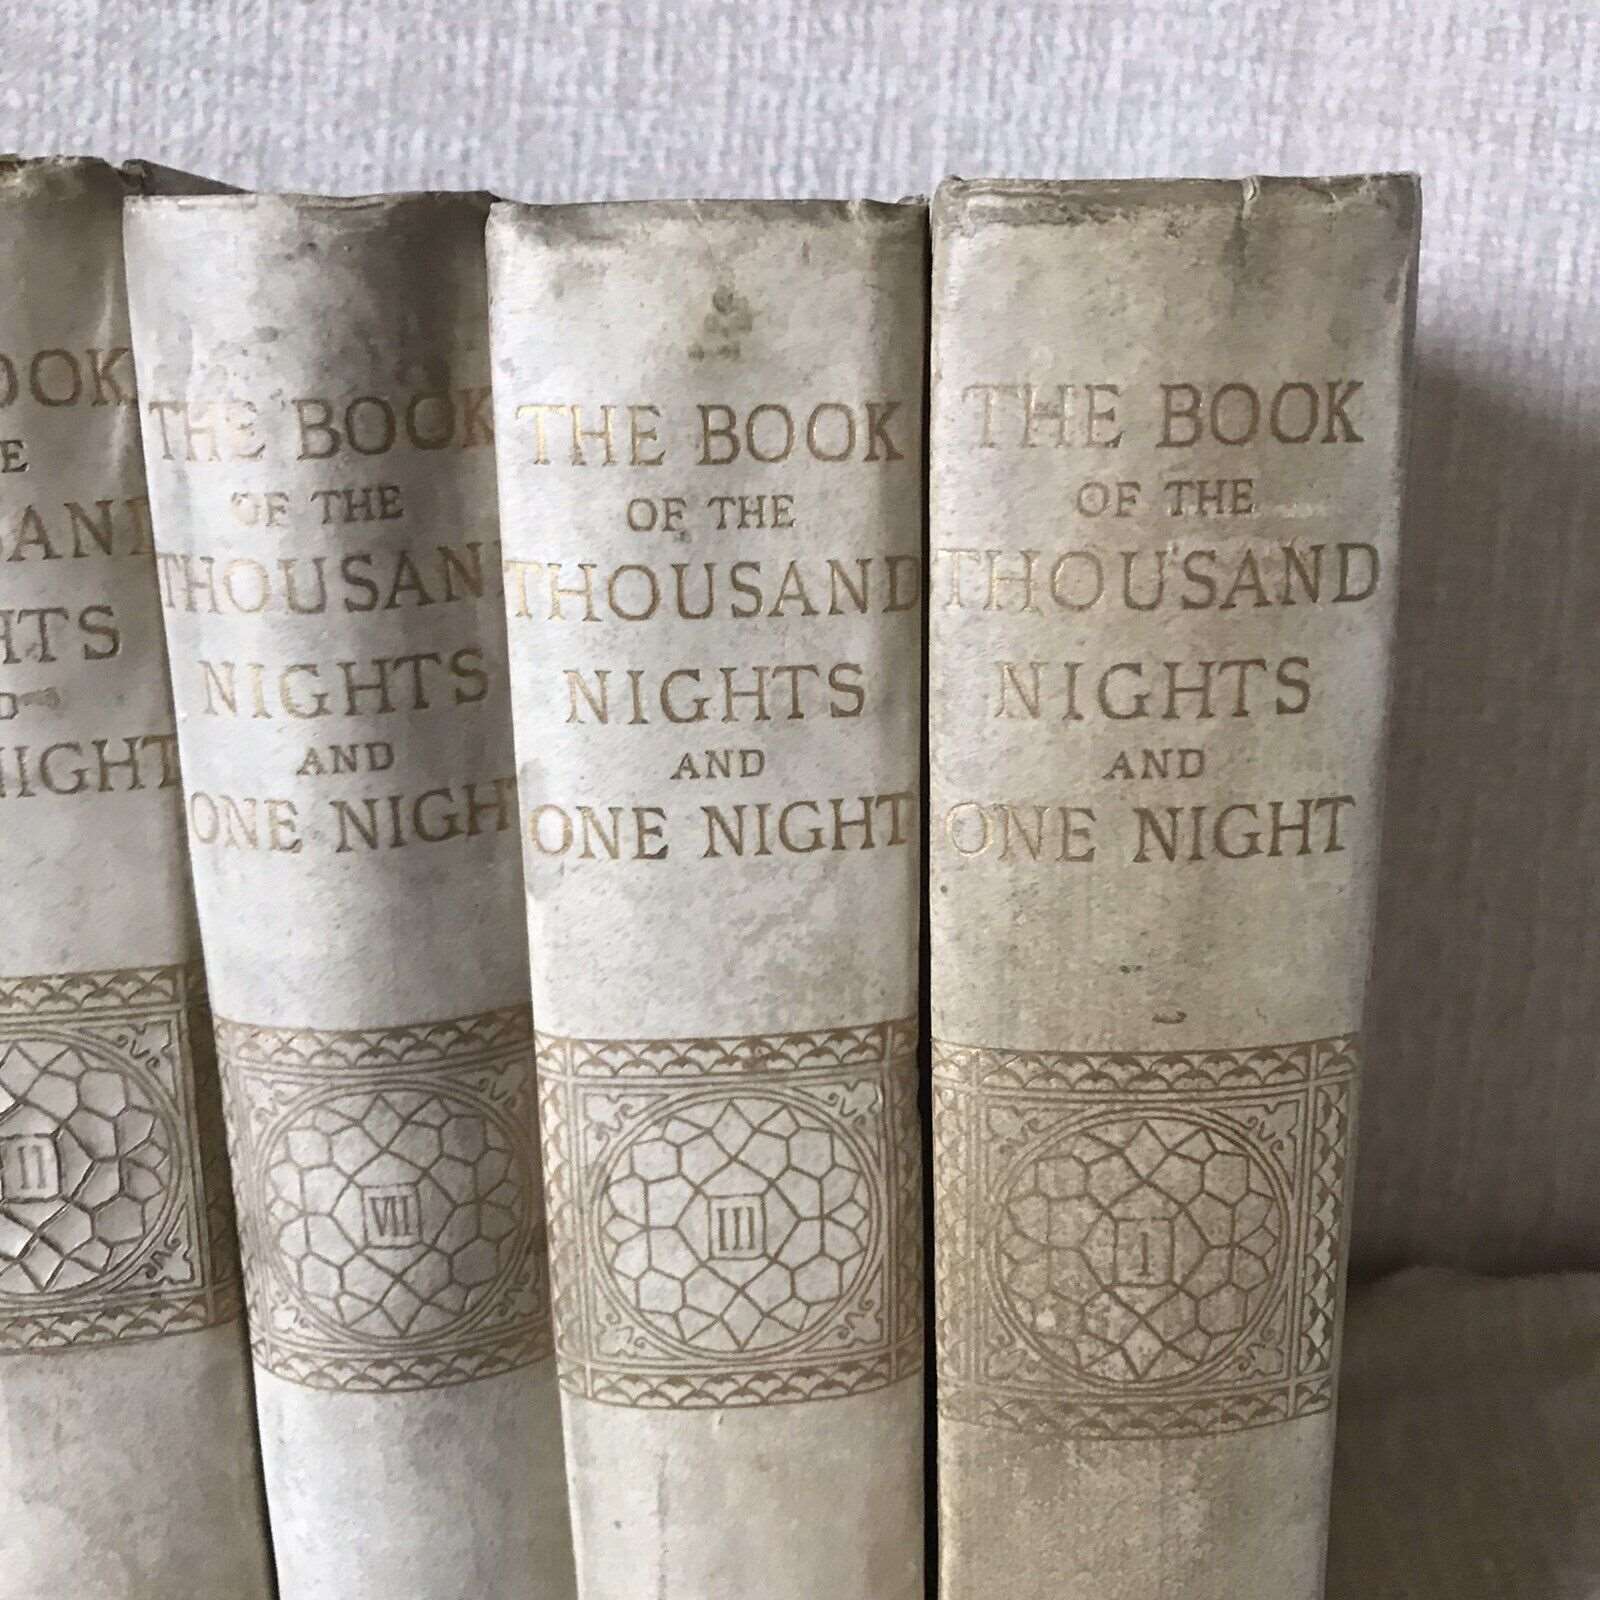 1884 The Book Of The Thousand Nights & One Night (9vols) John Payne Translated Honeyburn Books (UK)